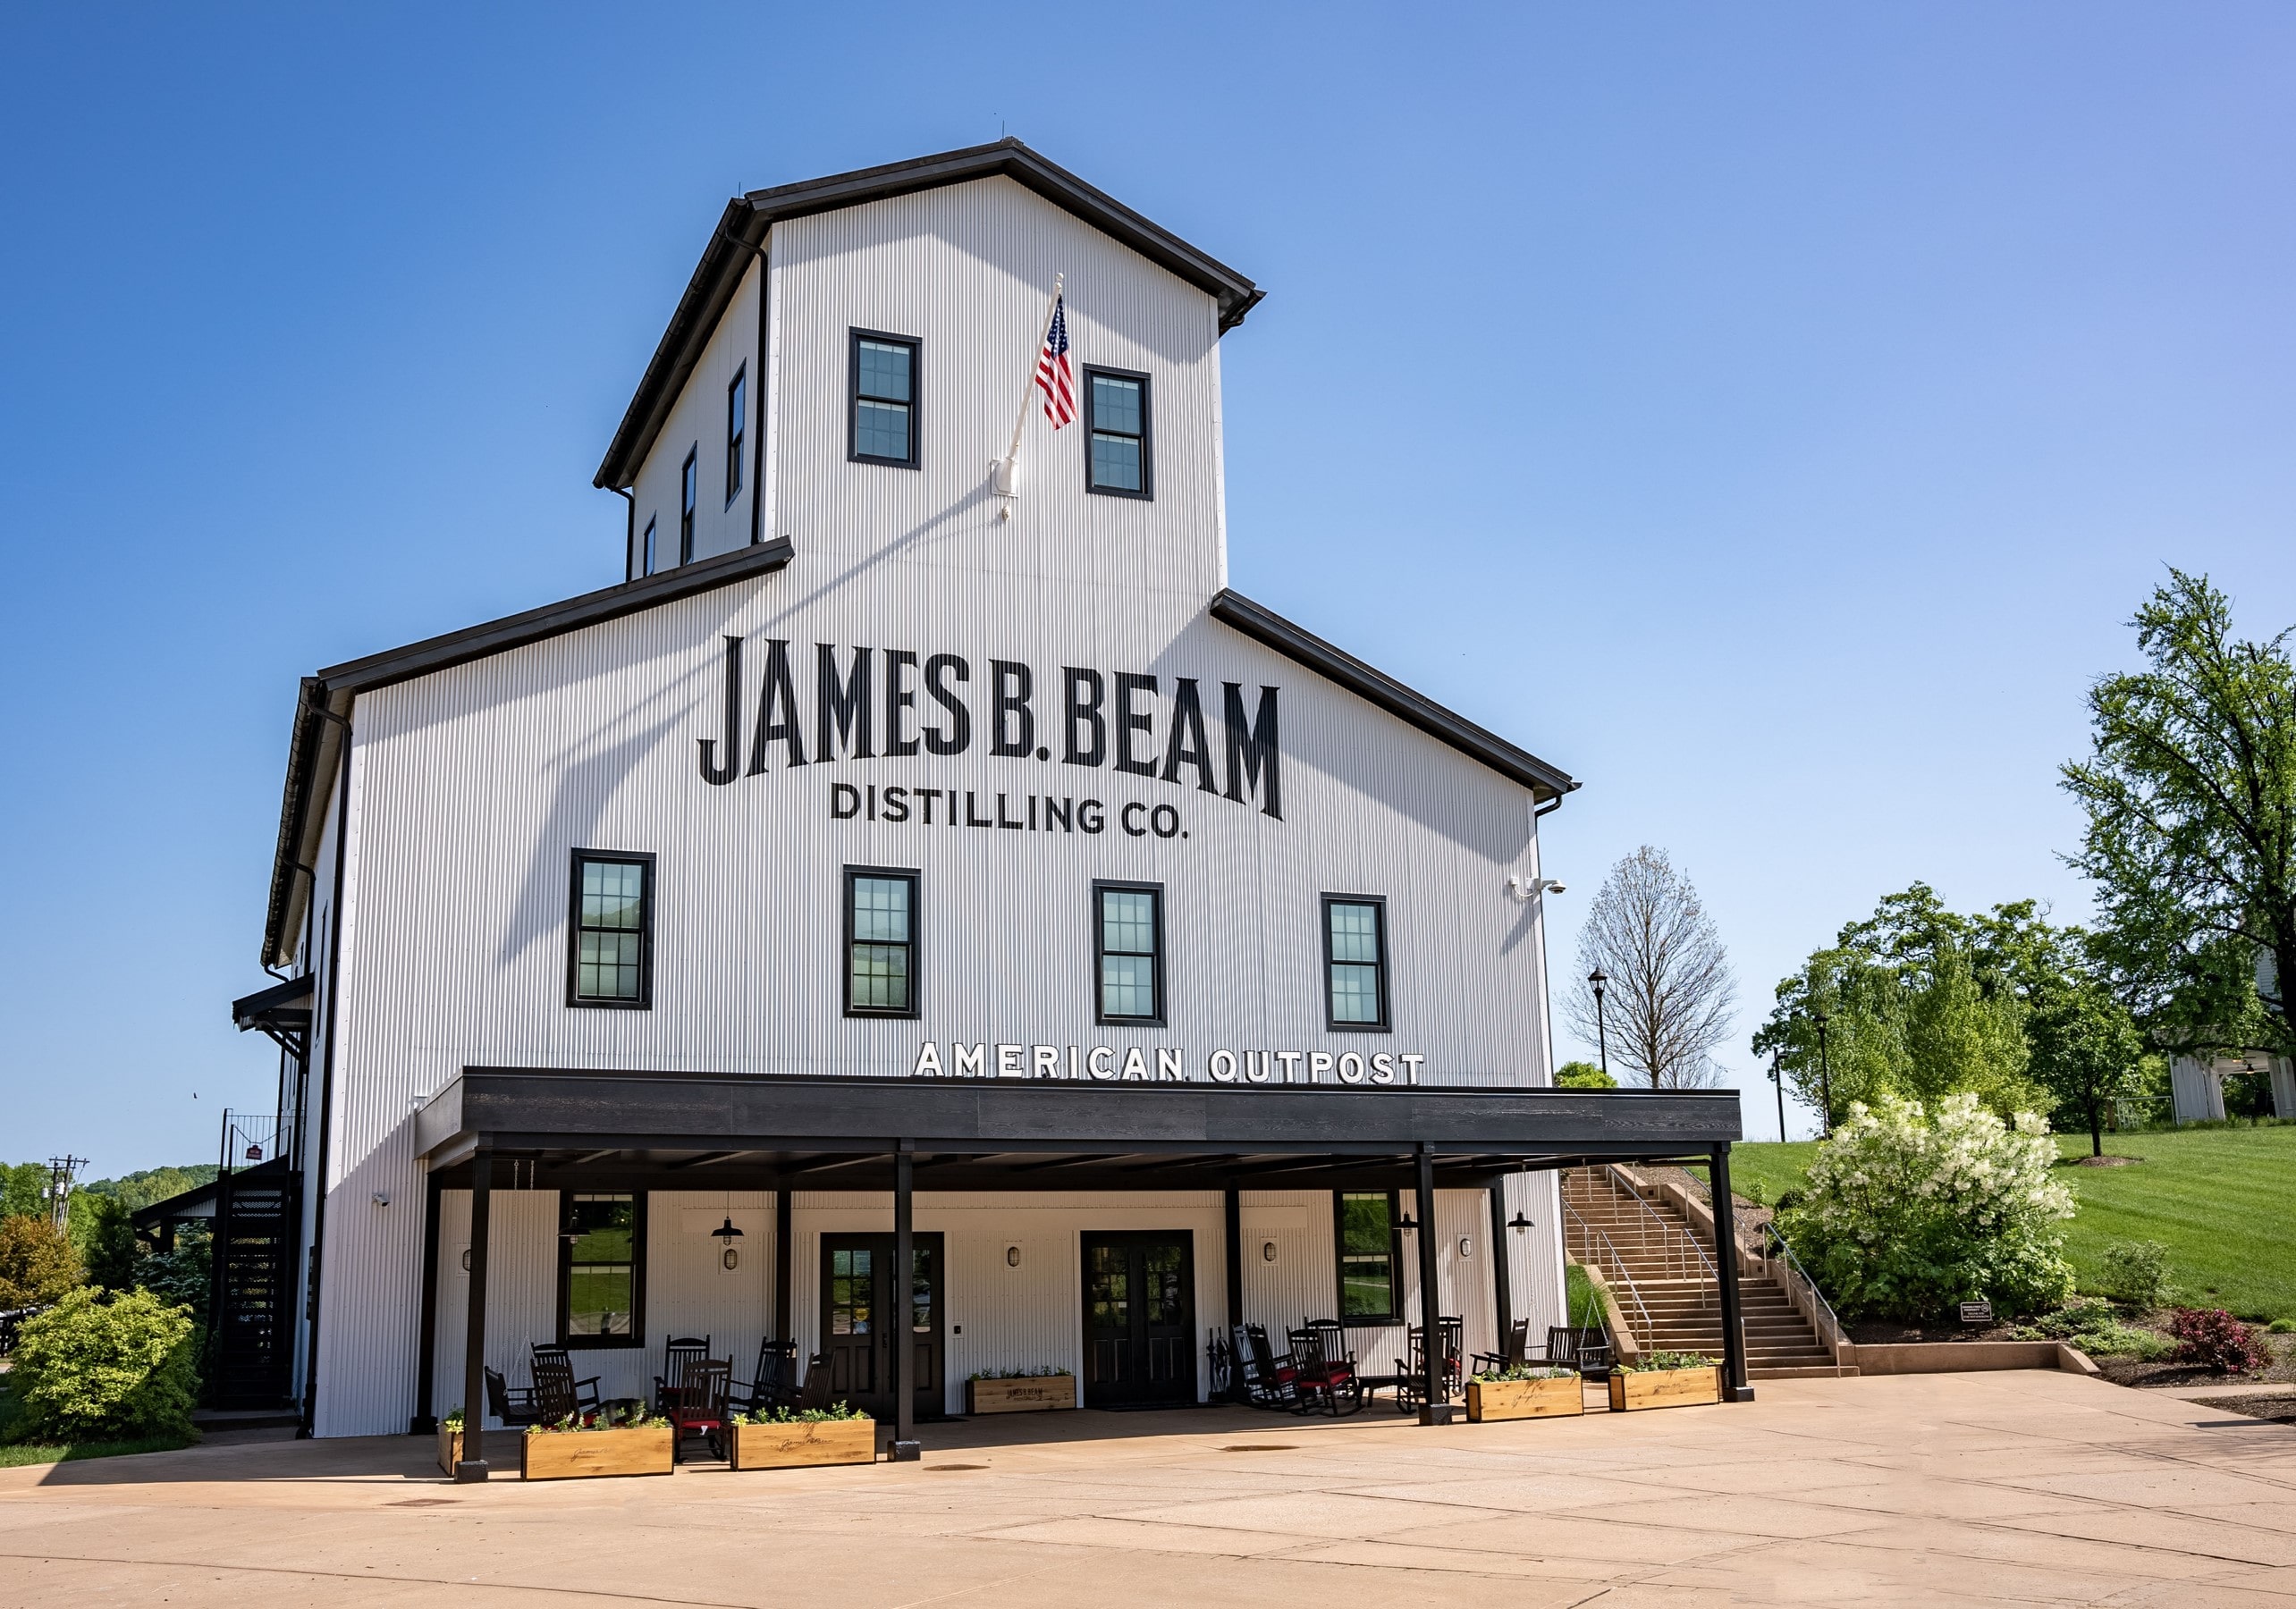 James B. Beam Distilling Co in Kentucky